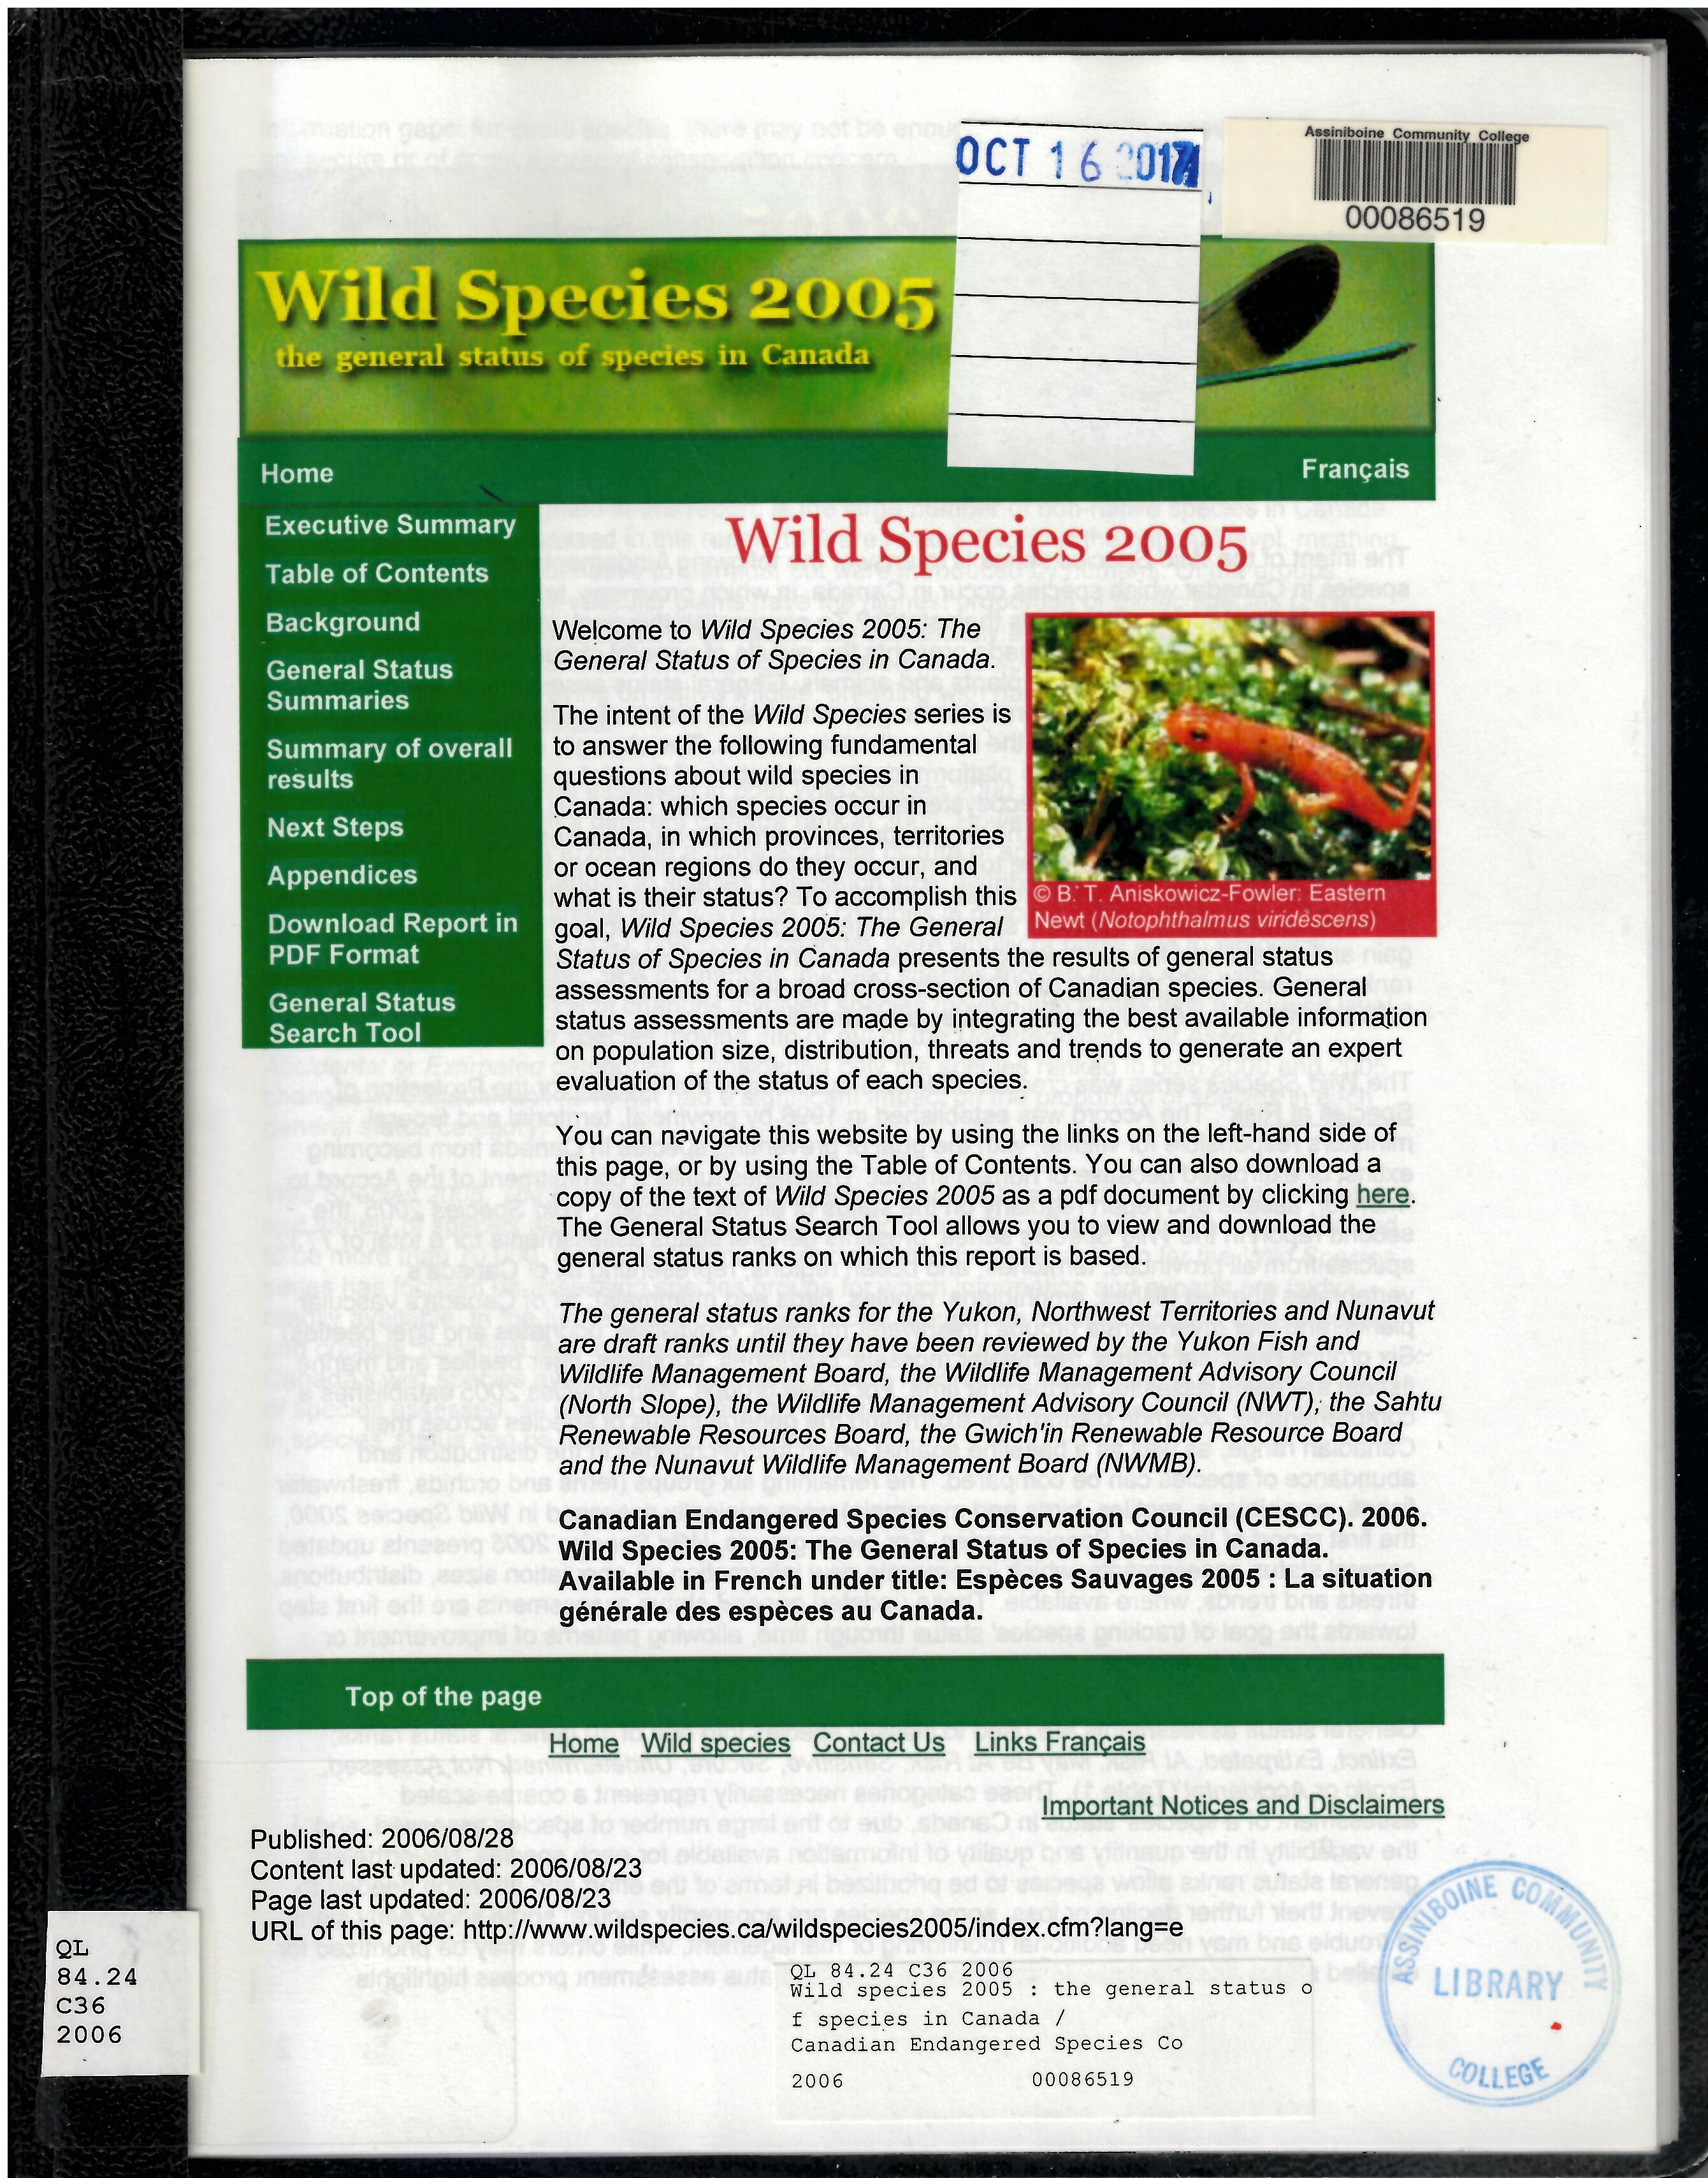 Wild species 2005 : the general status of species in Canada